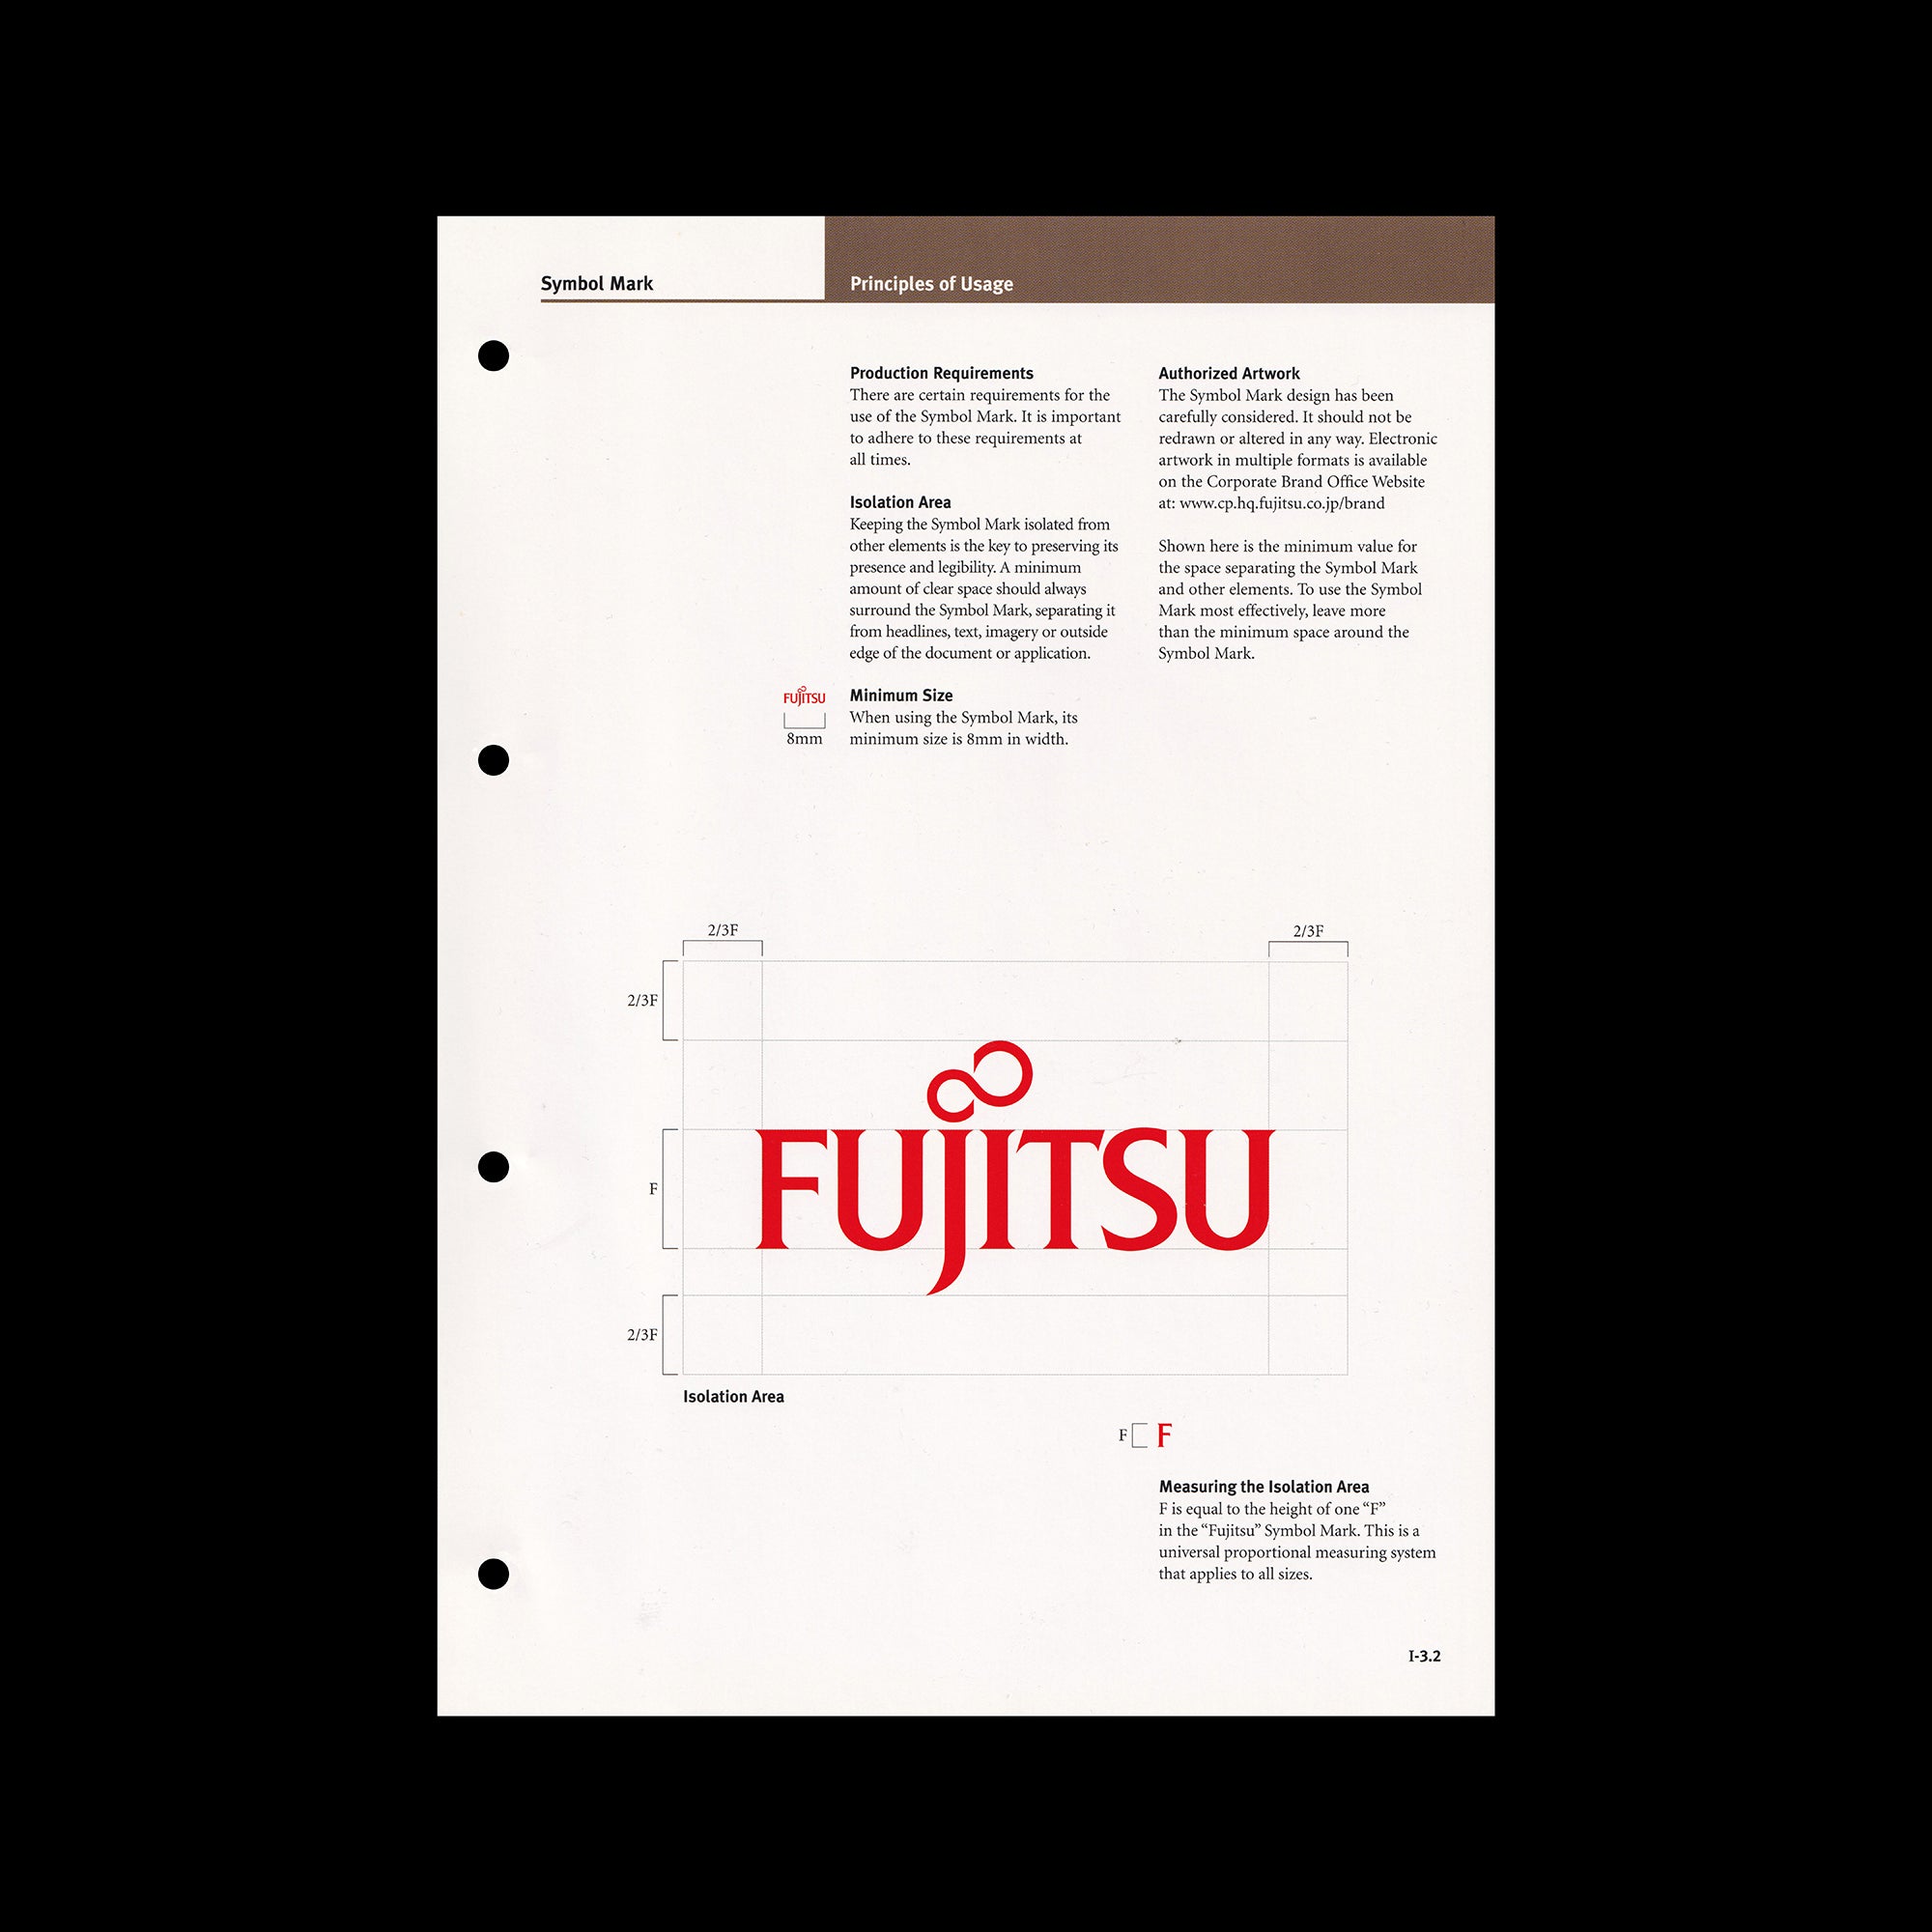 Fujitsu Brand Manual, 2001